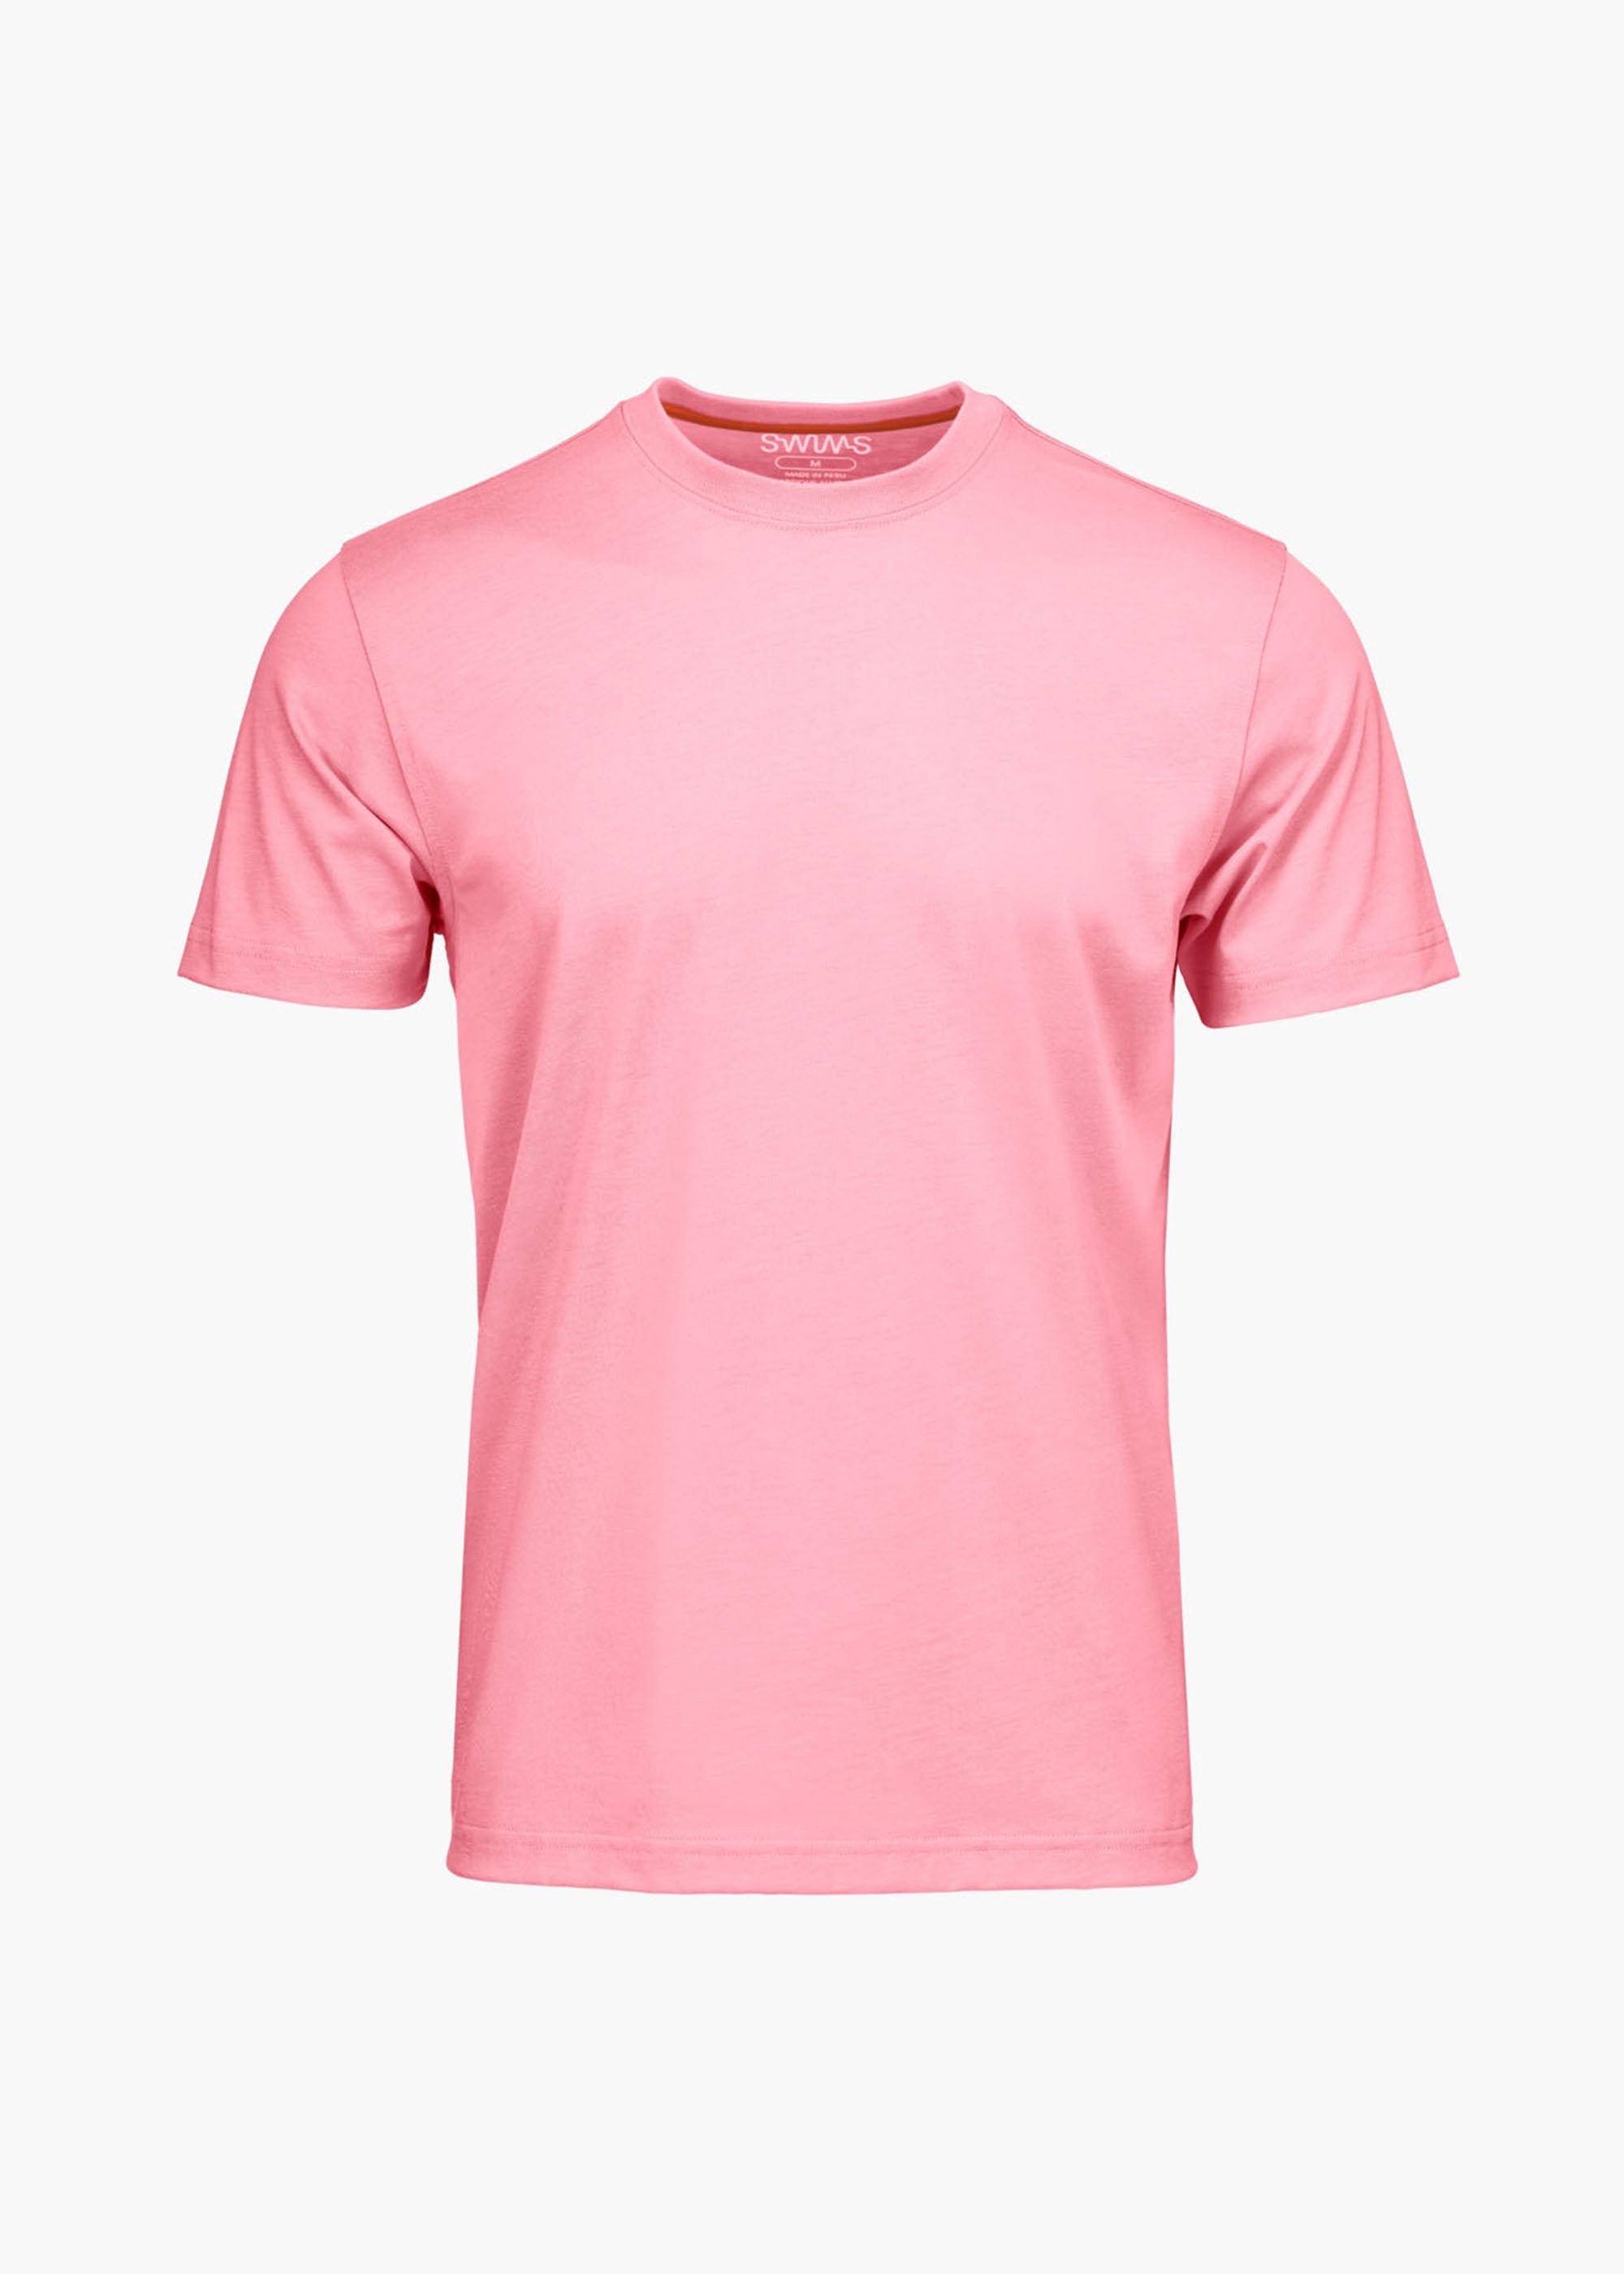 Aksla T Shirt - background::white,variant::Blush Pink